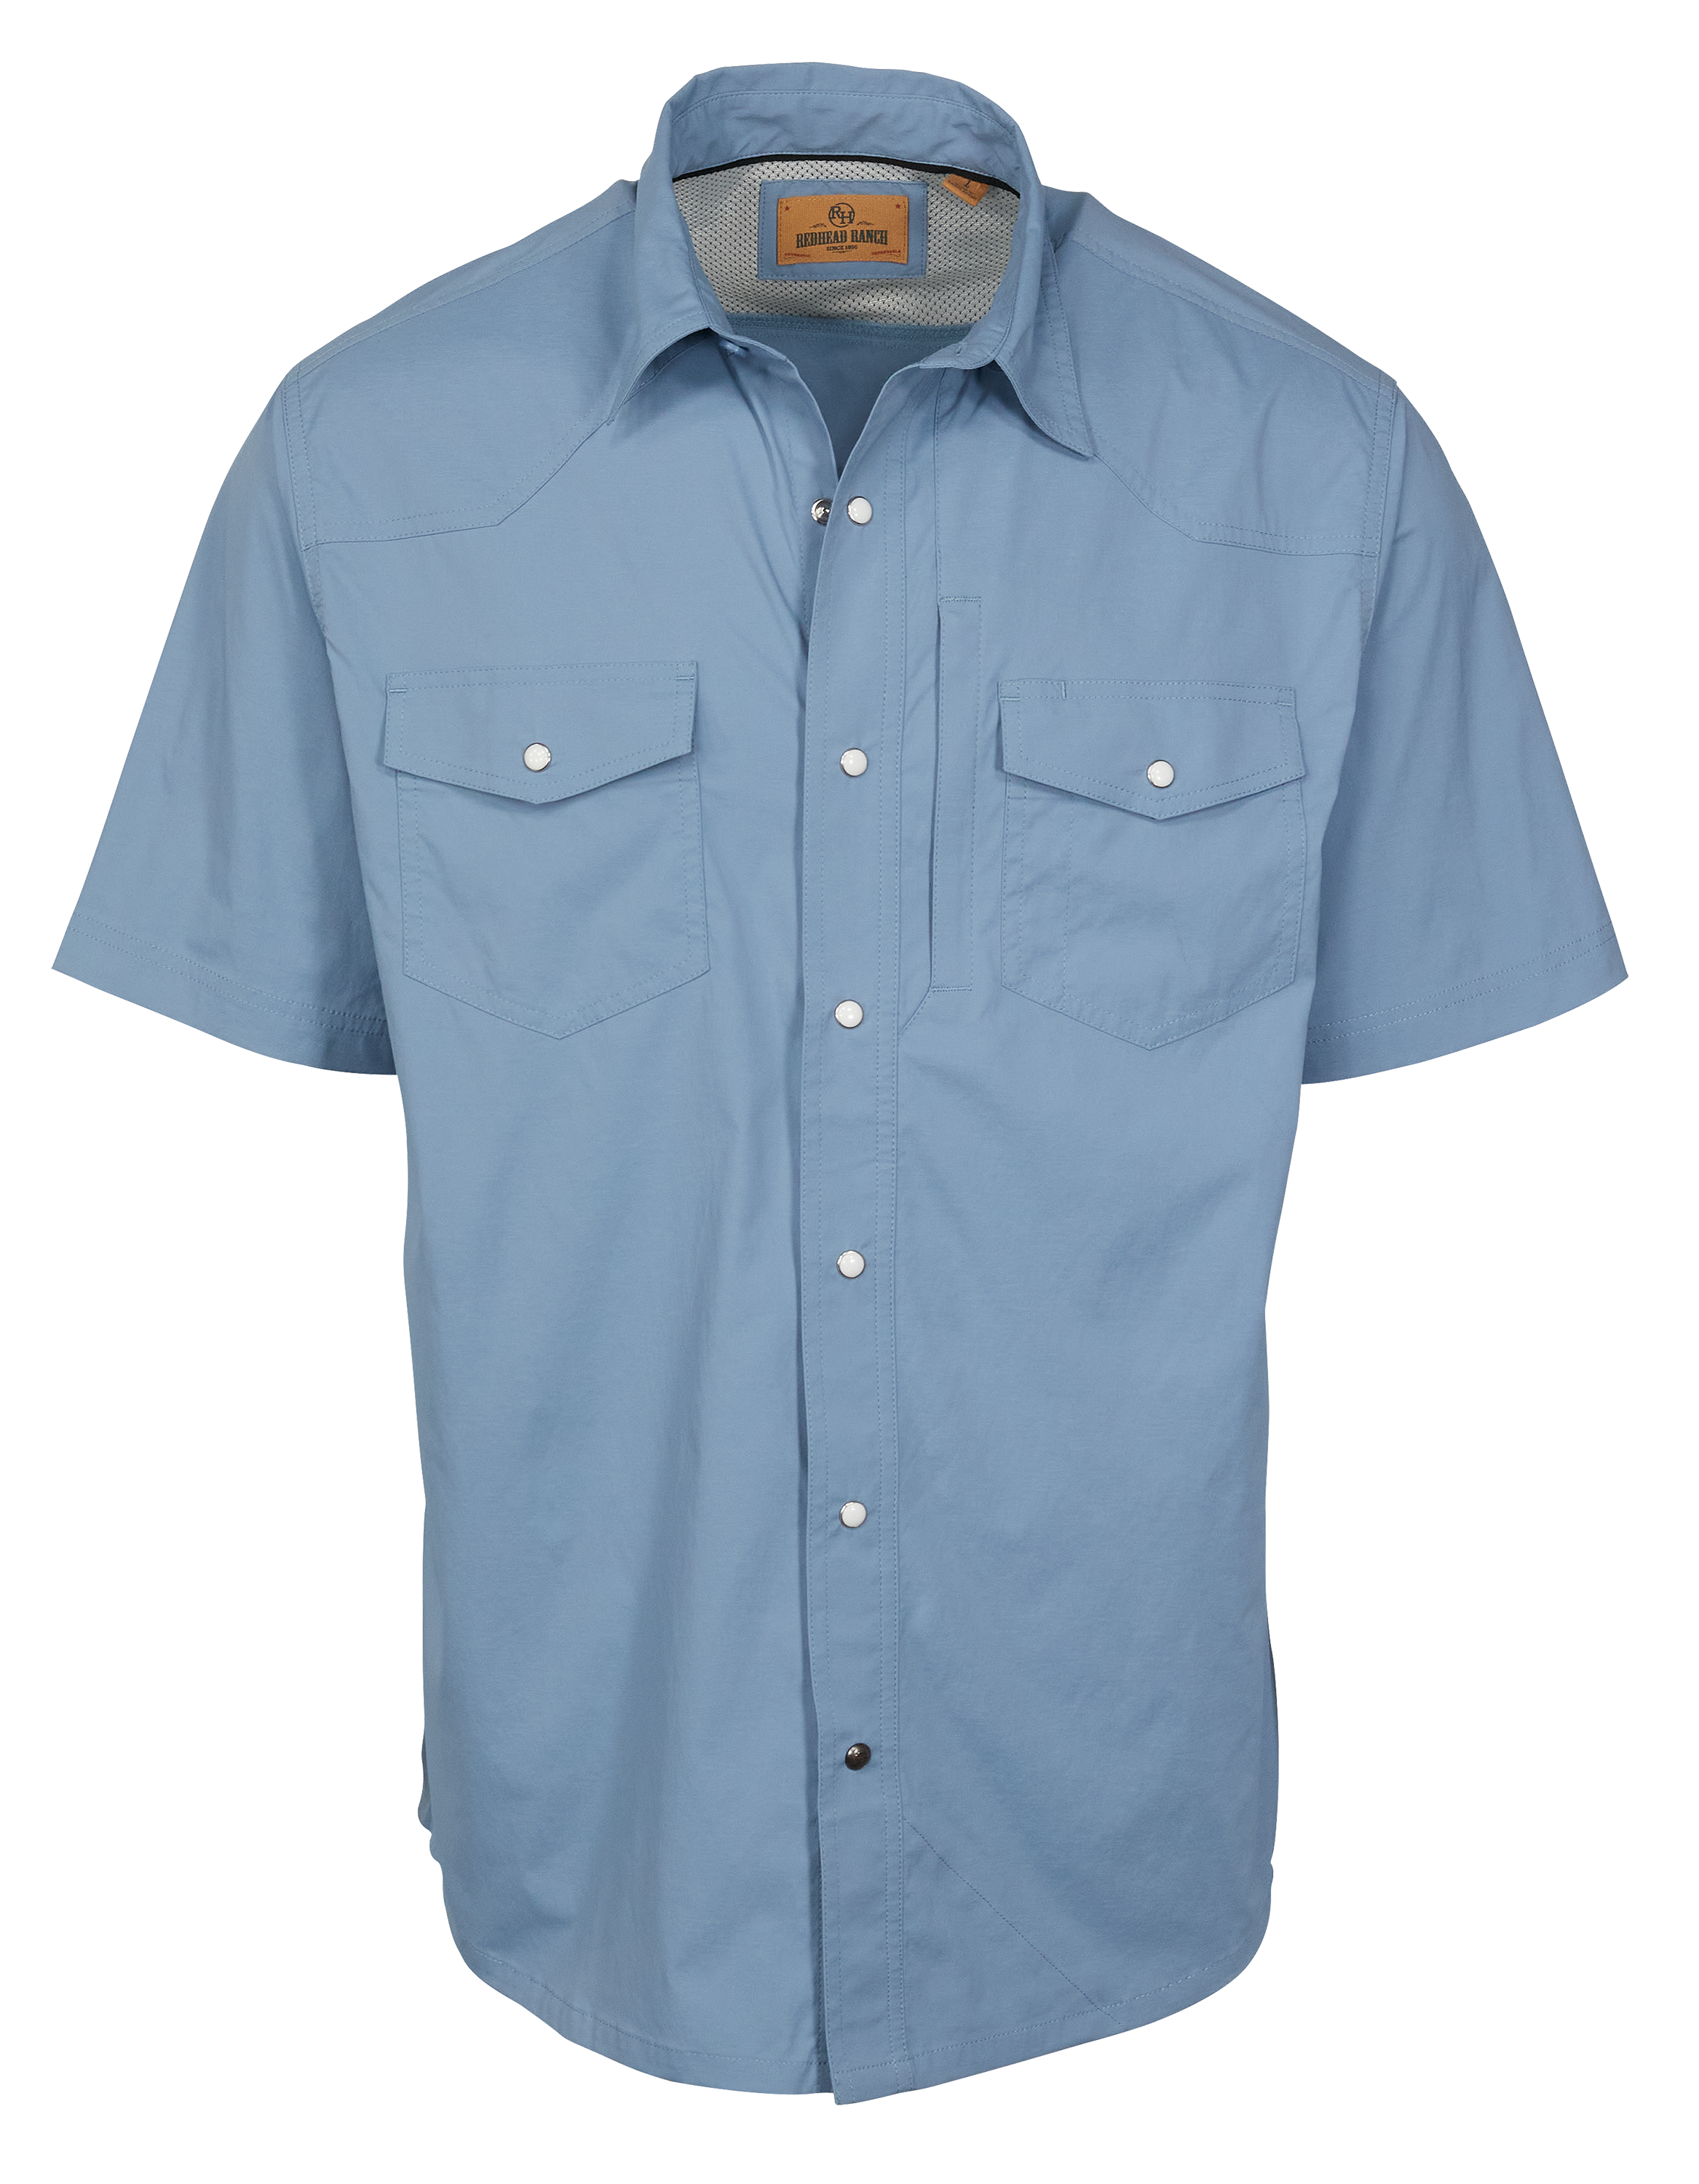 Poncho Short Sleeve Pearl Snap Fishing Shirt Green With Logo Men's Large  Regular